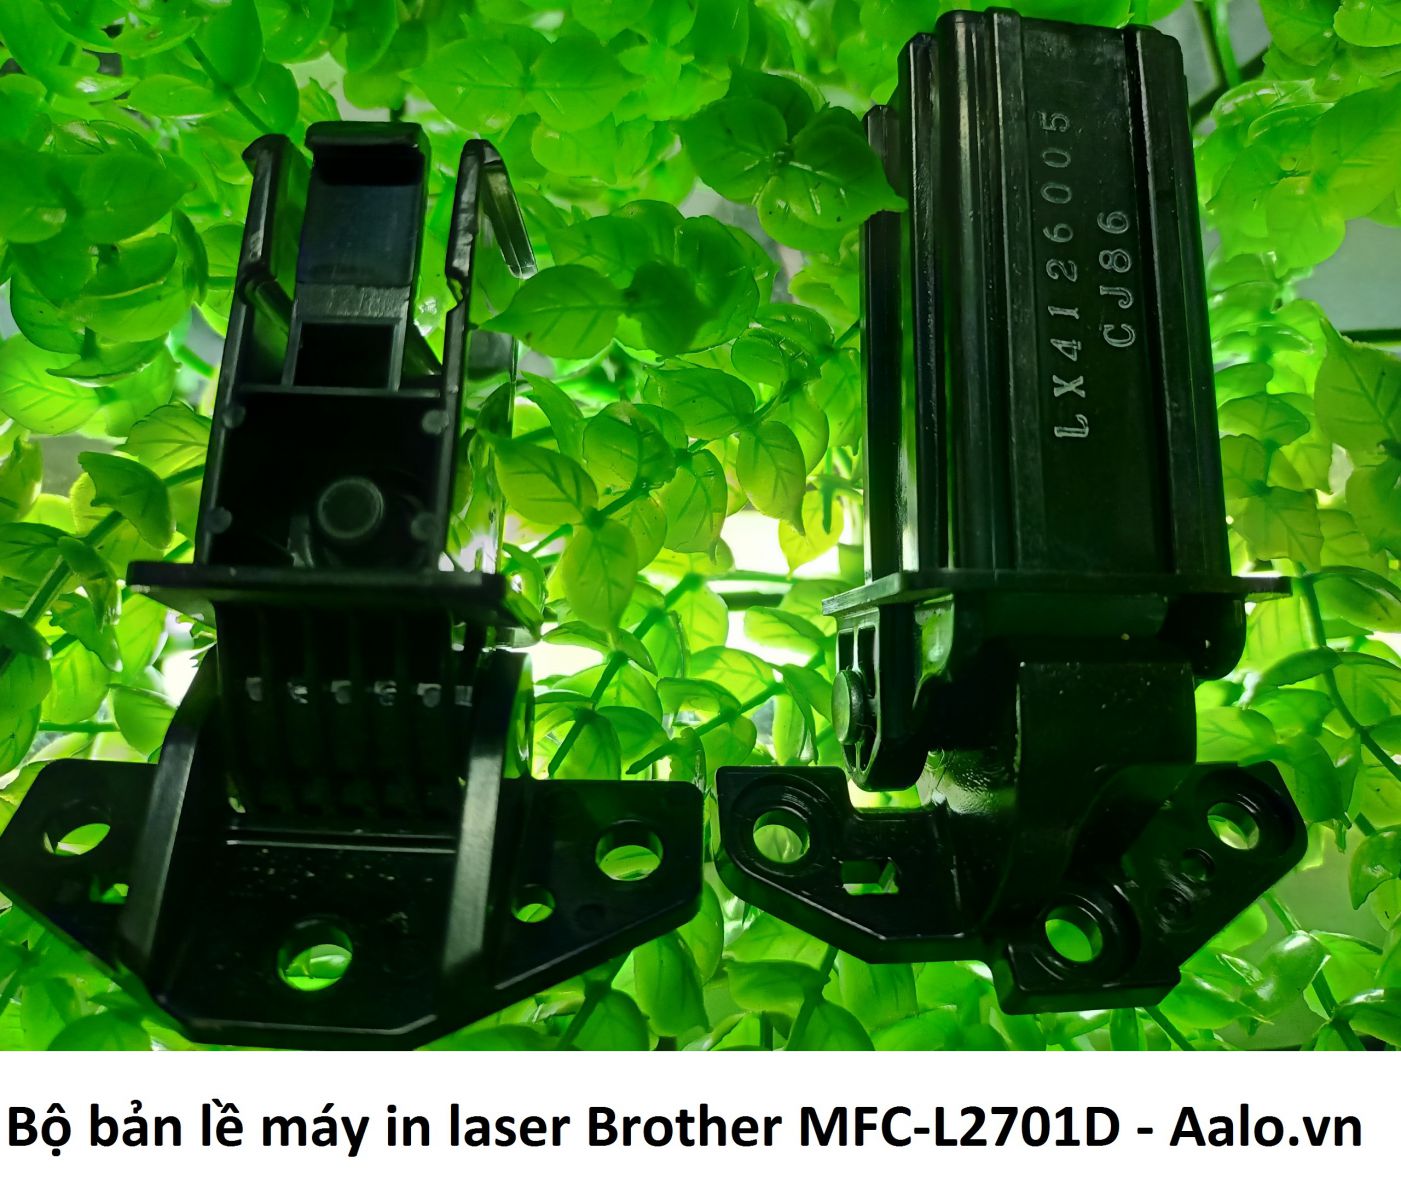 Bộ bản lề máy in laser Brother MFC-L2701D - Aalo.vn